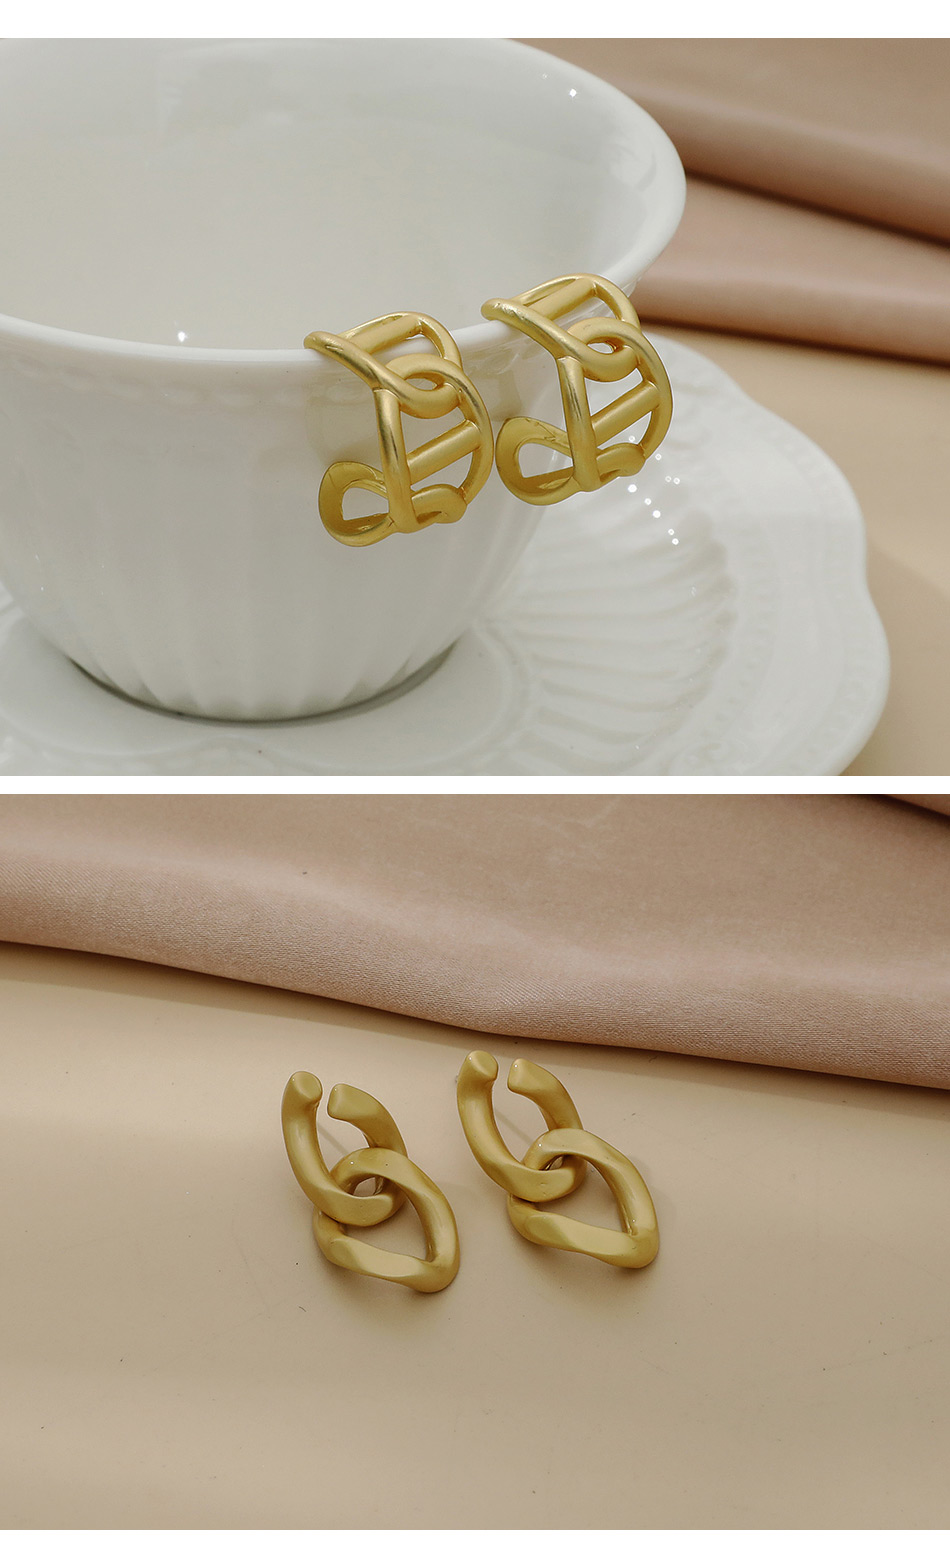 Fashion Gold Color Alloy Geometric Chain Earrings,Stud Earrings